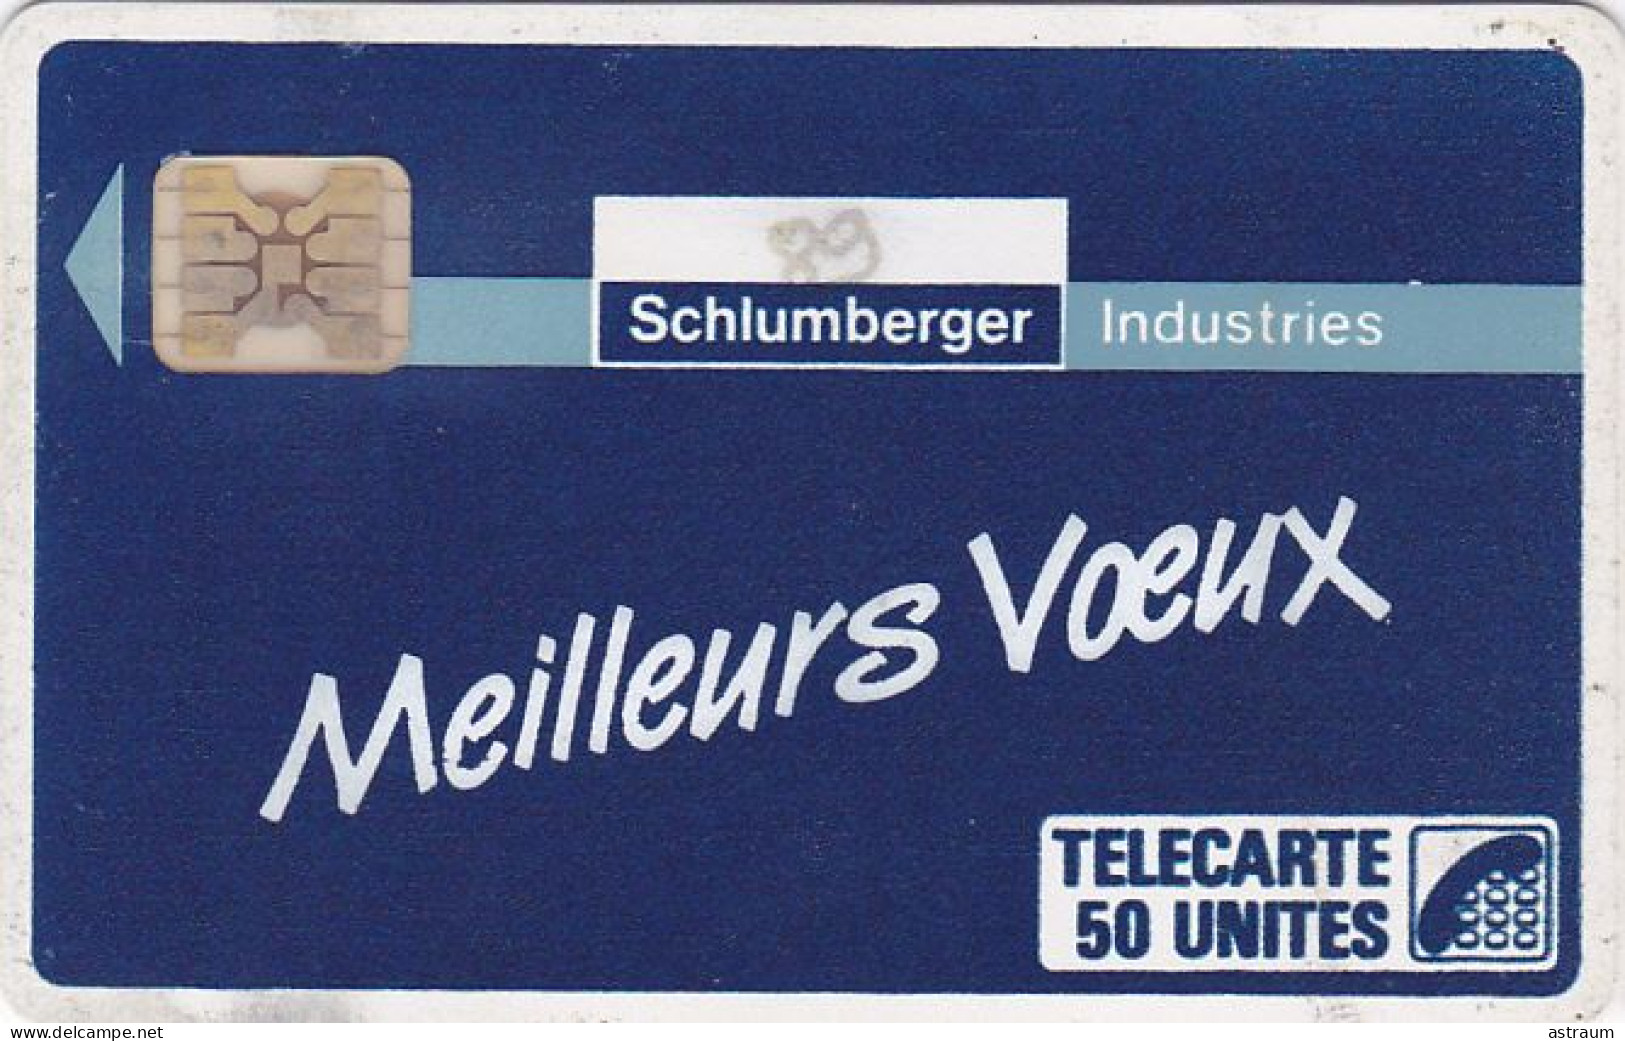 Telecarte D26 - Schlumberger Industries Voeux 88- 50u - Sc4ob - 1988 - Privat